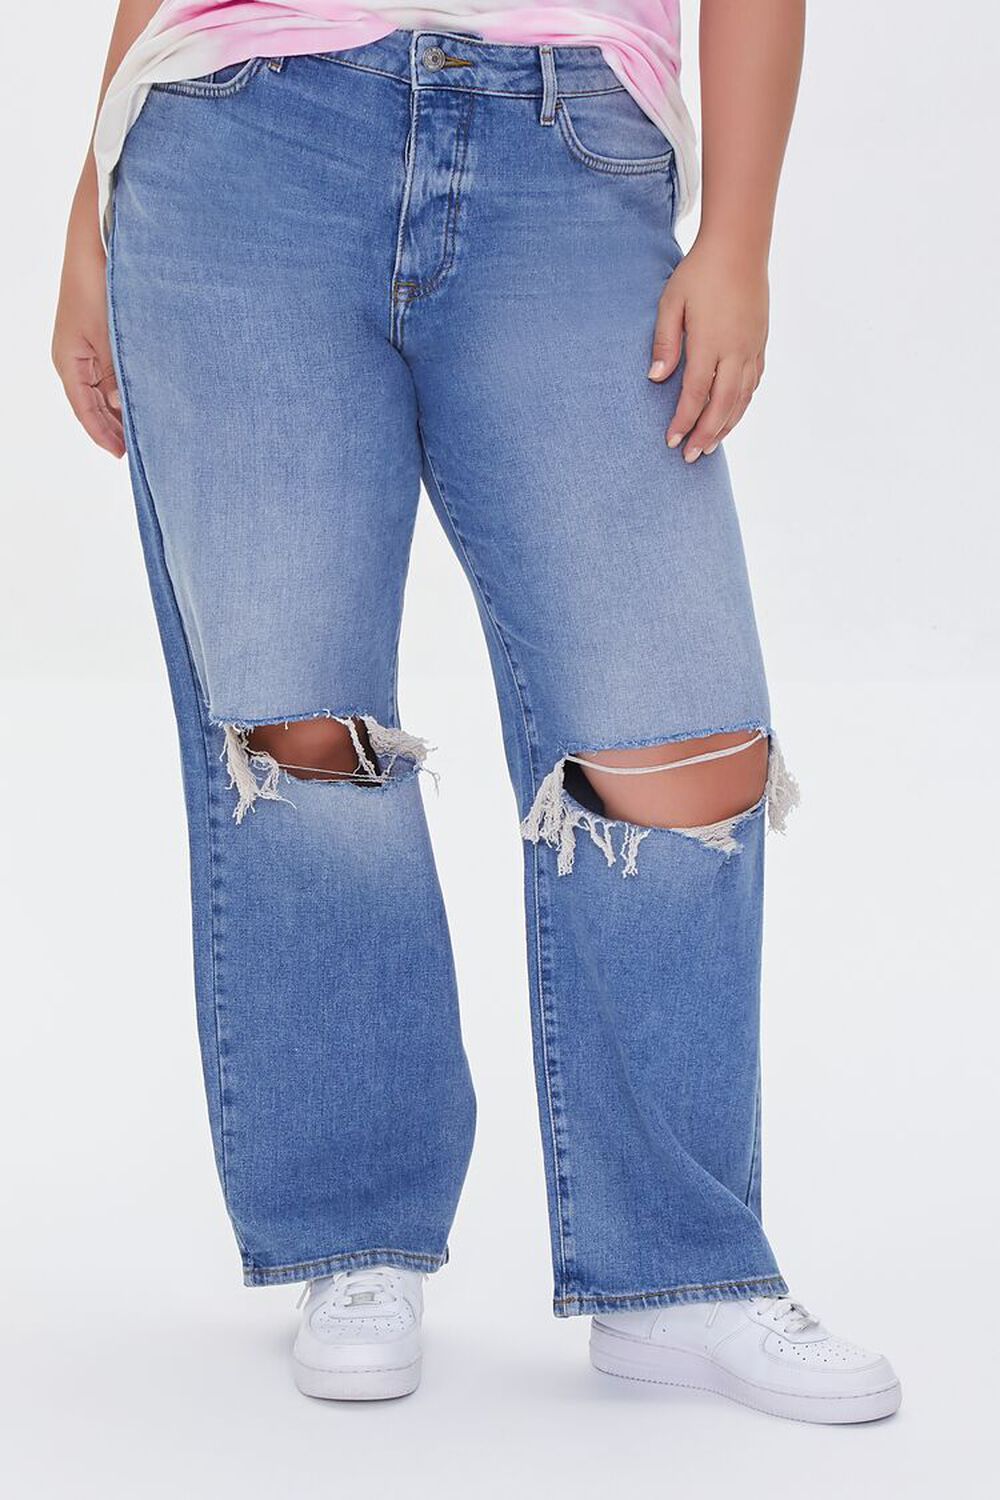 MEDIUM DENIM Plus Size Distressed Straight-Leg Jeans, image 2